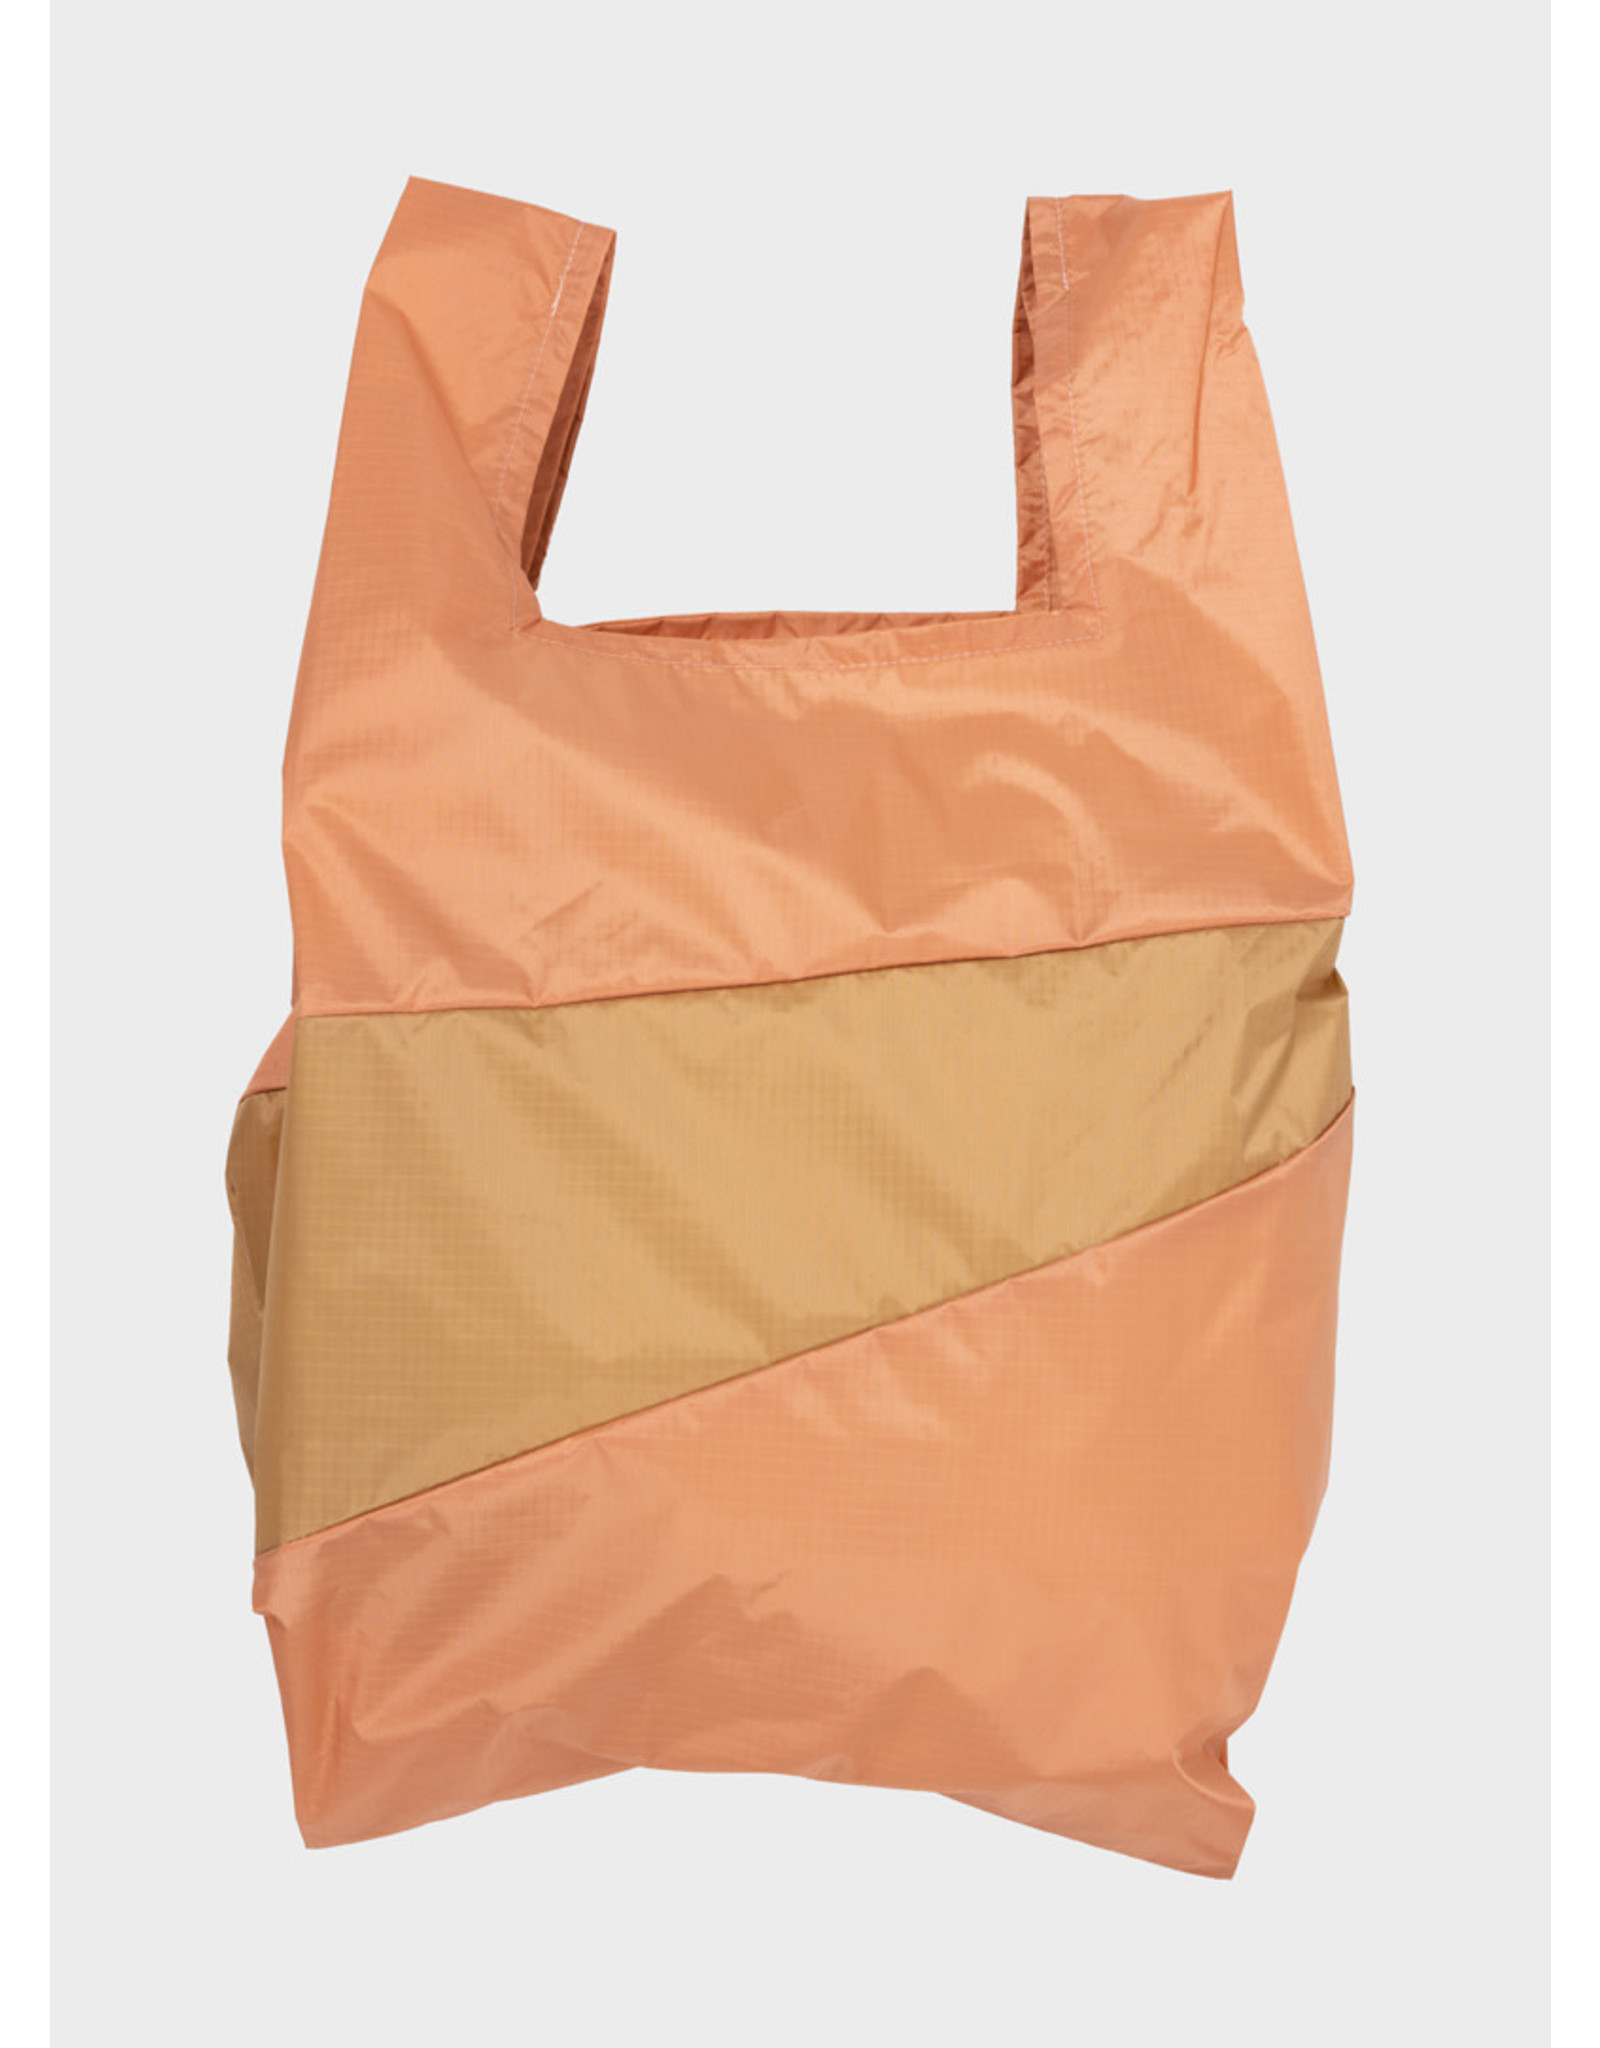 Susan Bijl Shopping bag L, Hobby & Fun - 37,5 x 69 x 34cm